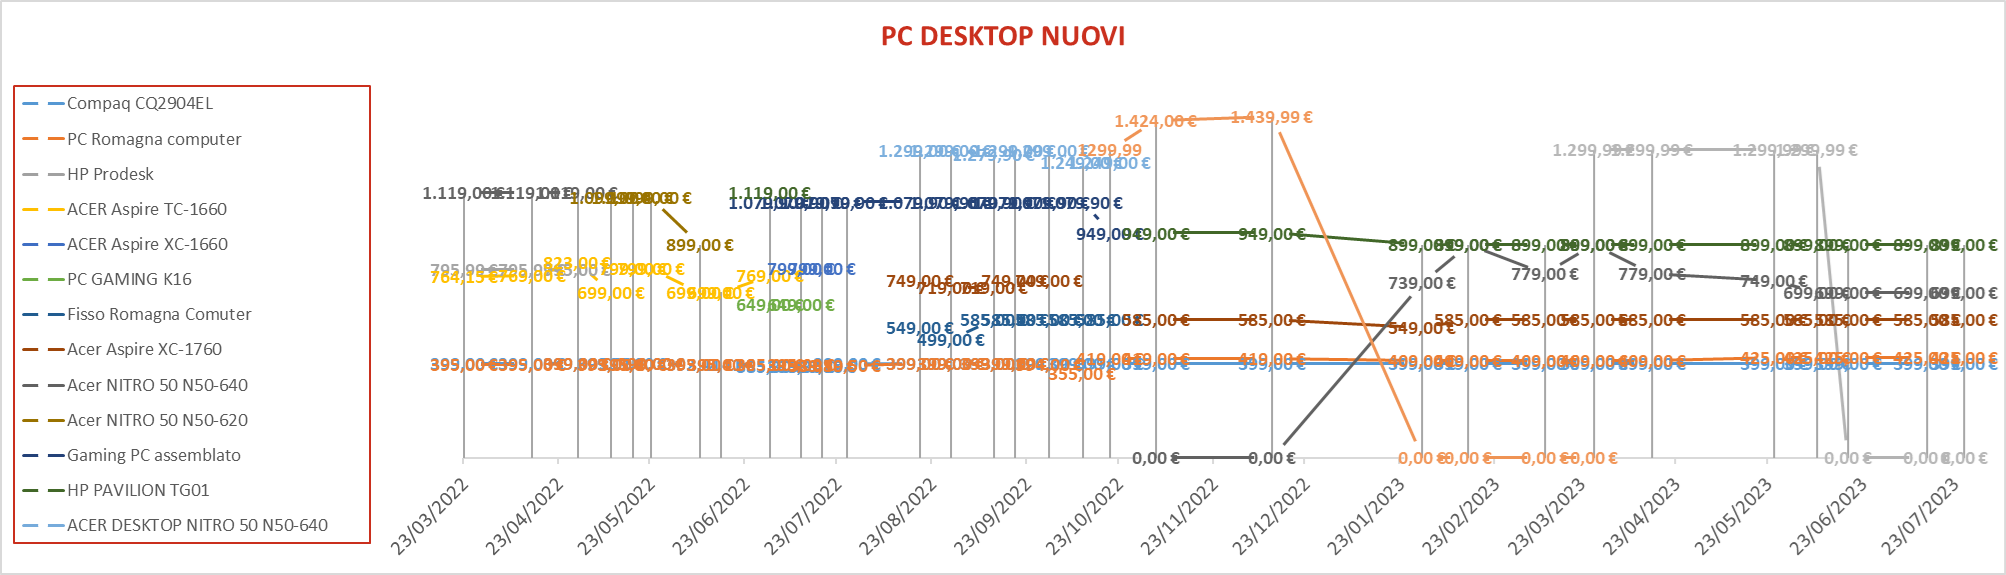 PC Desktop Nuovi 6